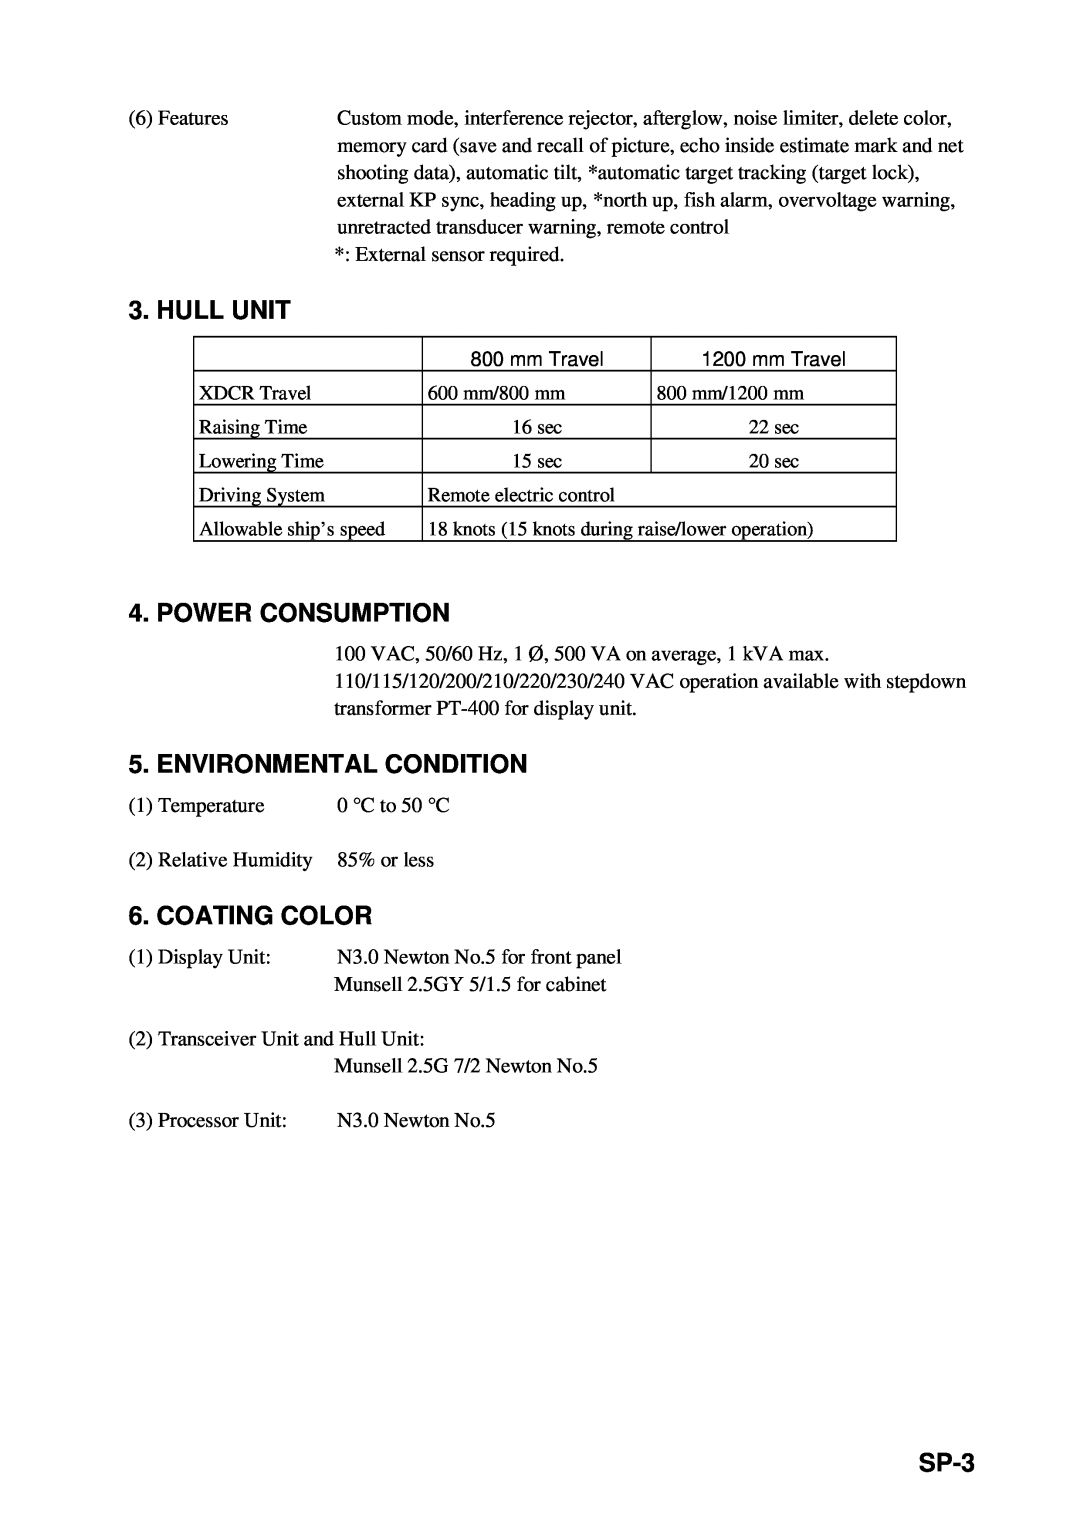 Furuno CSH-53 manual Hull Unit, Power Consumption, Environmental Condition, Coating Color, SP-3 